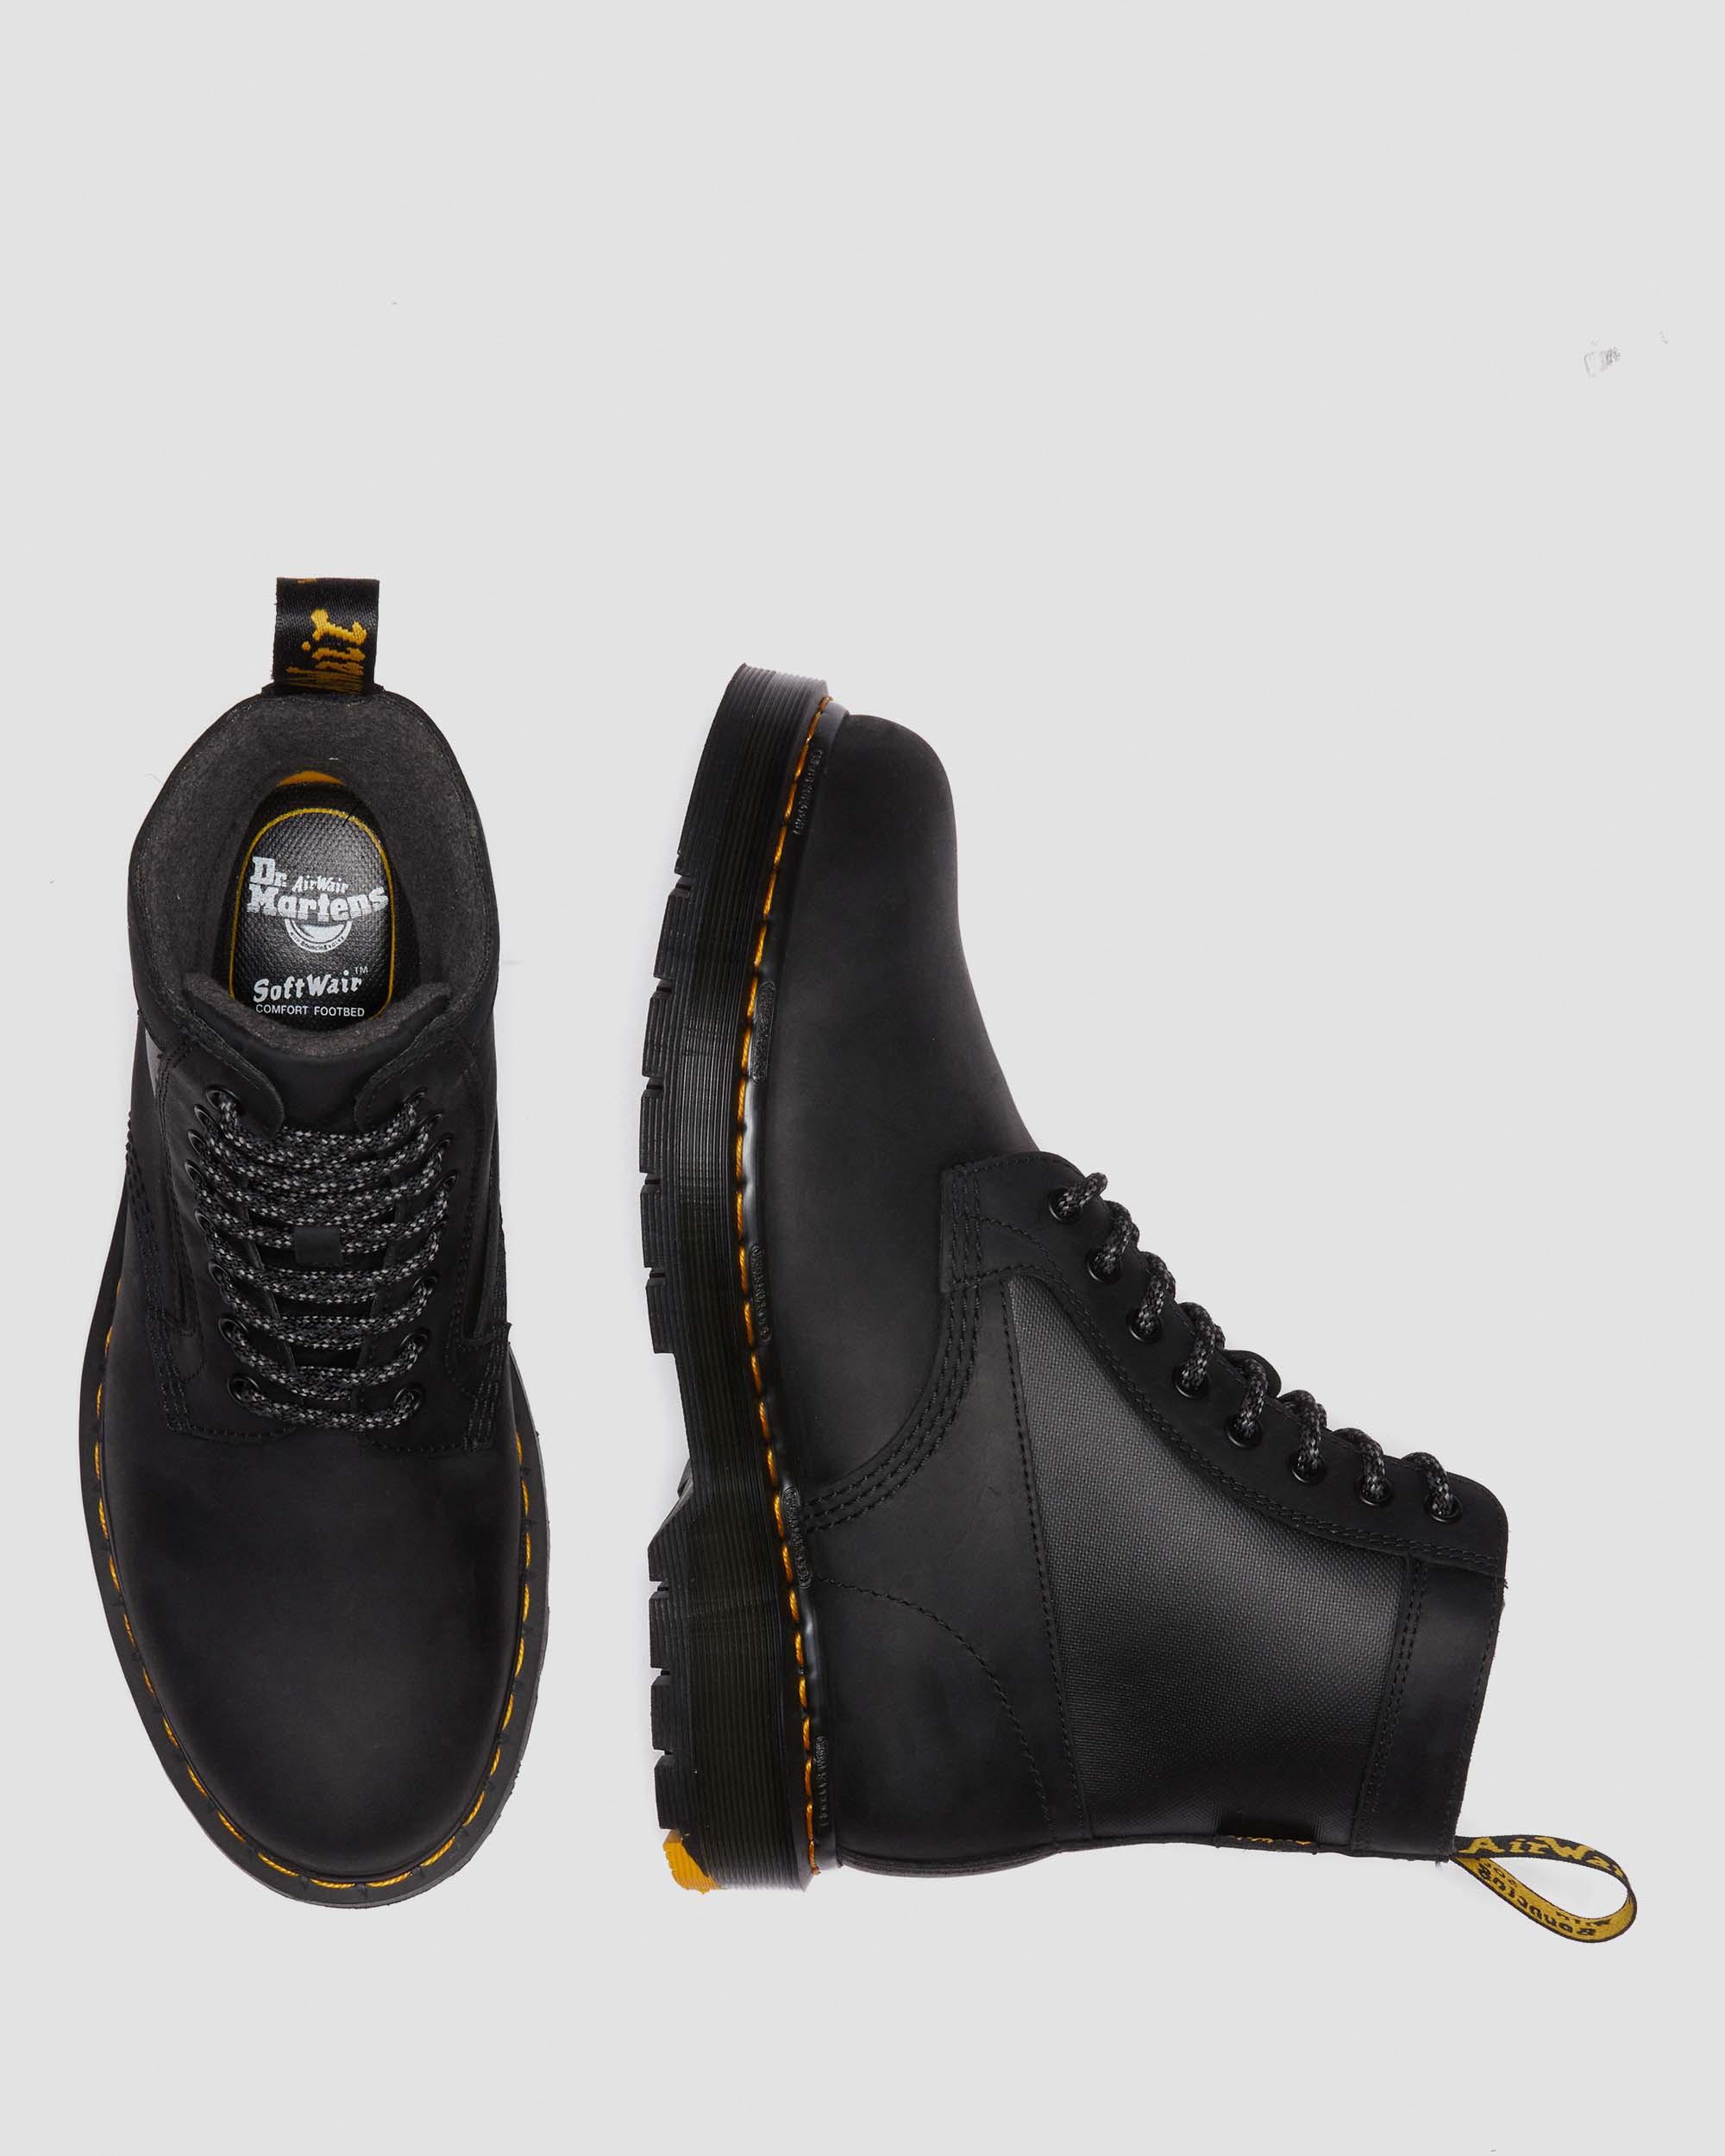 1460 Trinity Wintergrip Waterproof Boots in Black | Dr. Martens